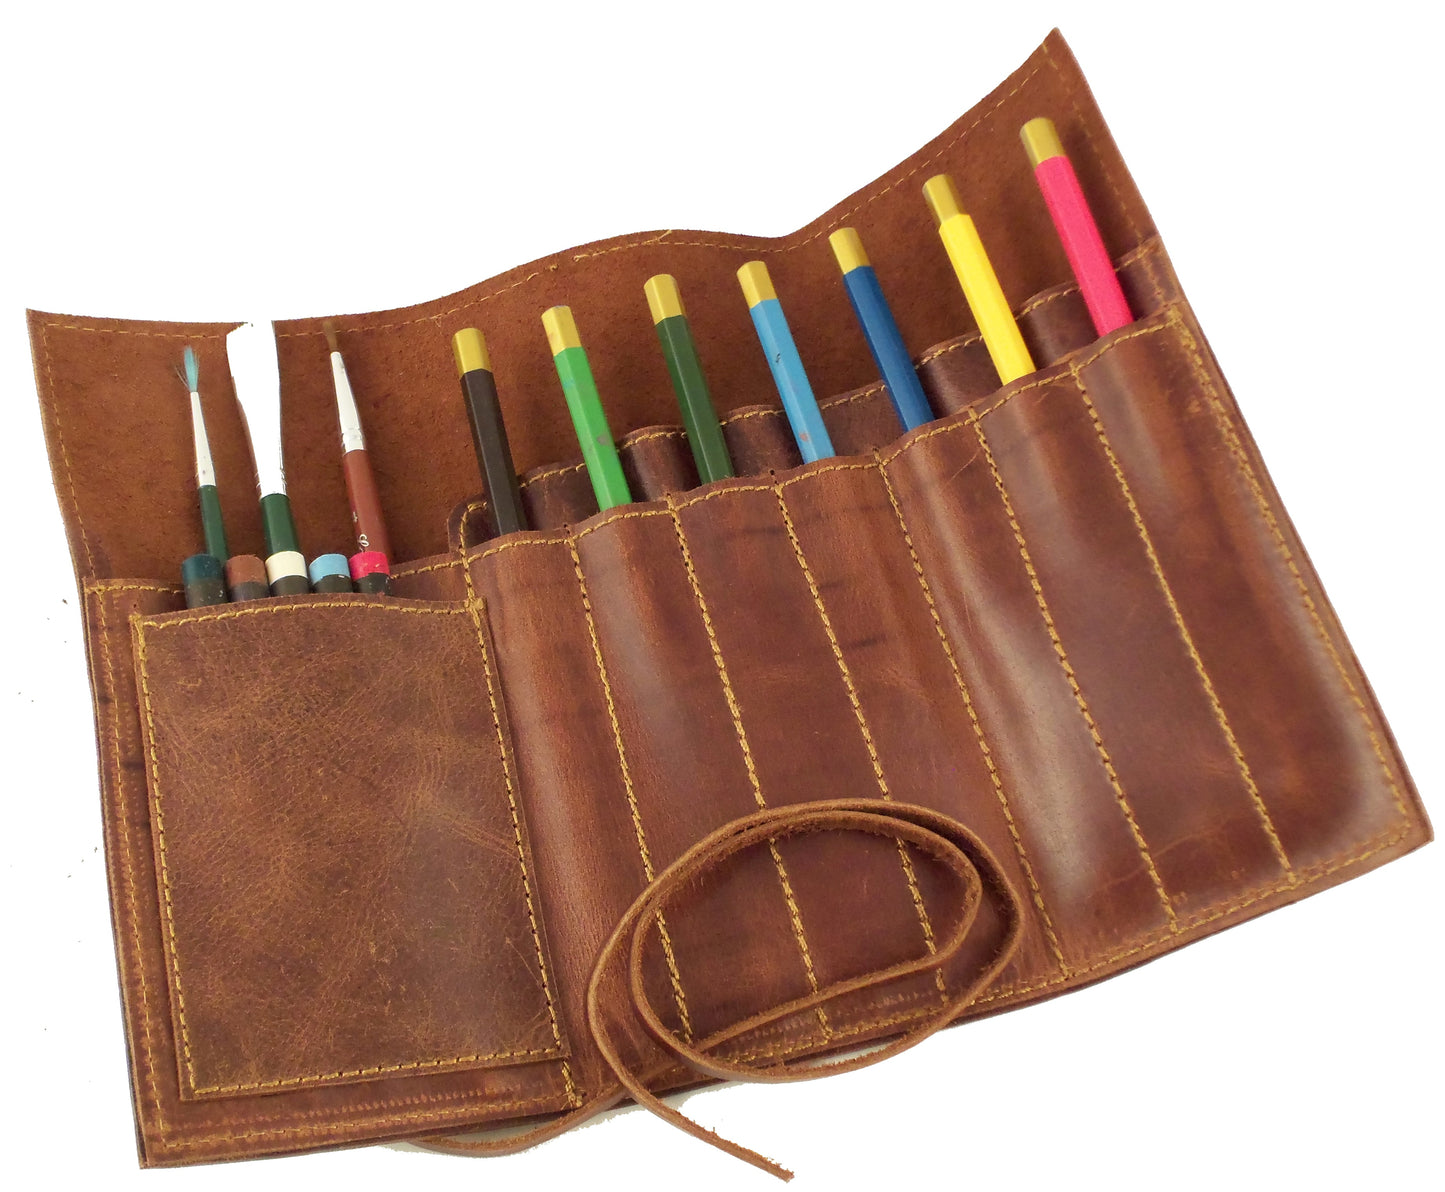 Rustic Genuine Leather Pencil Roll - Pen and Pencil Case - Rustic Ridge Leather